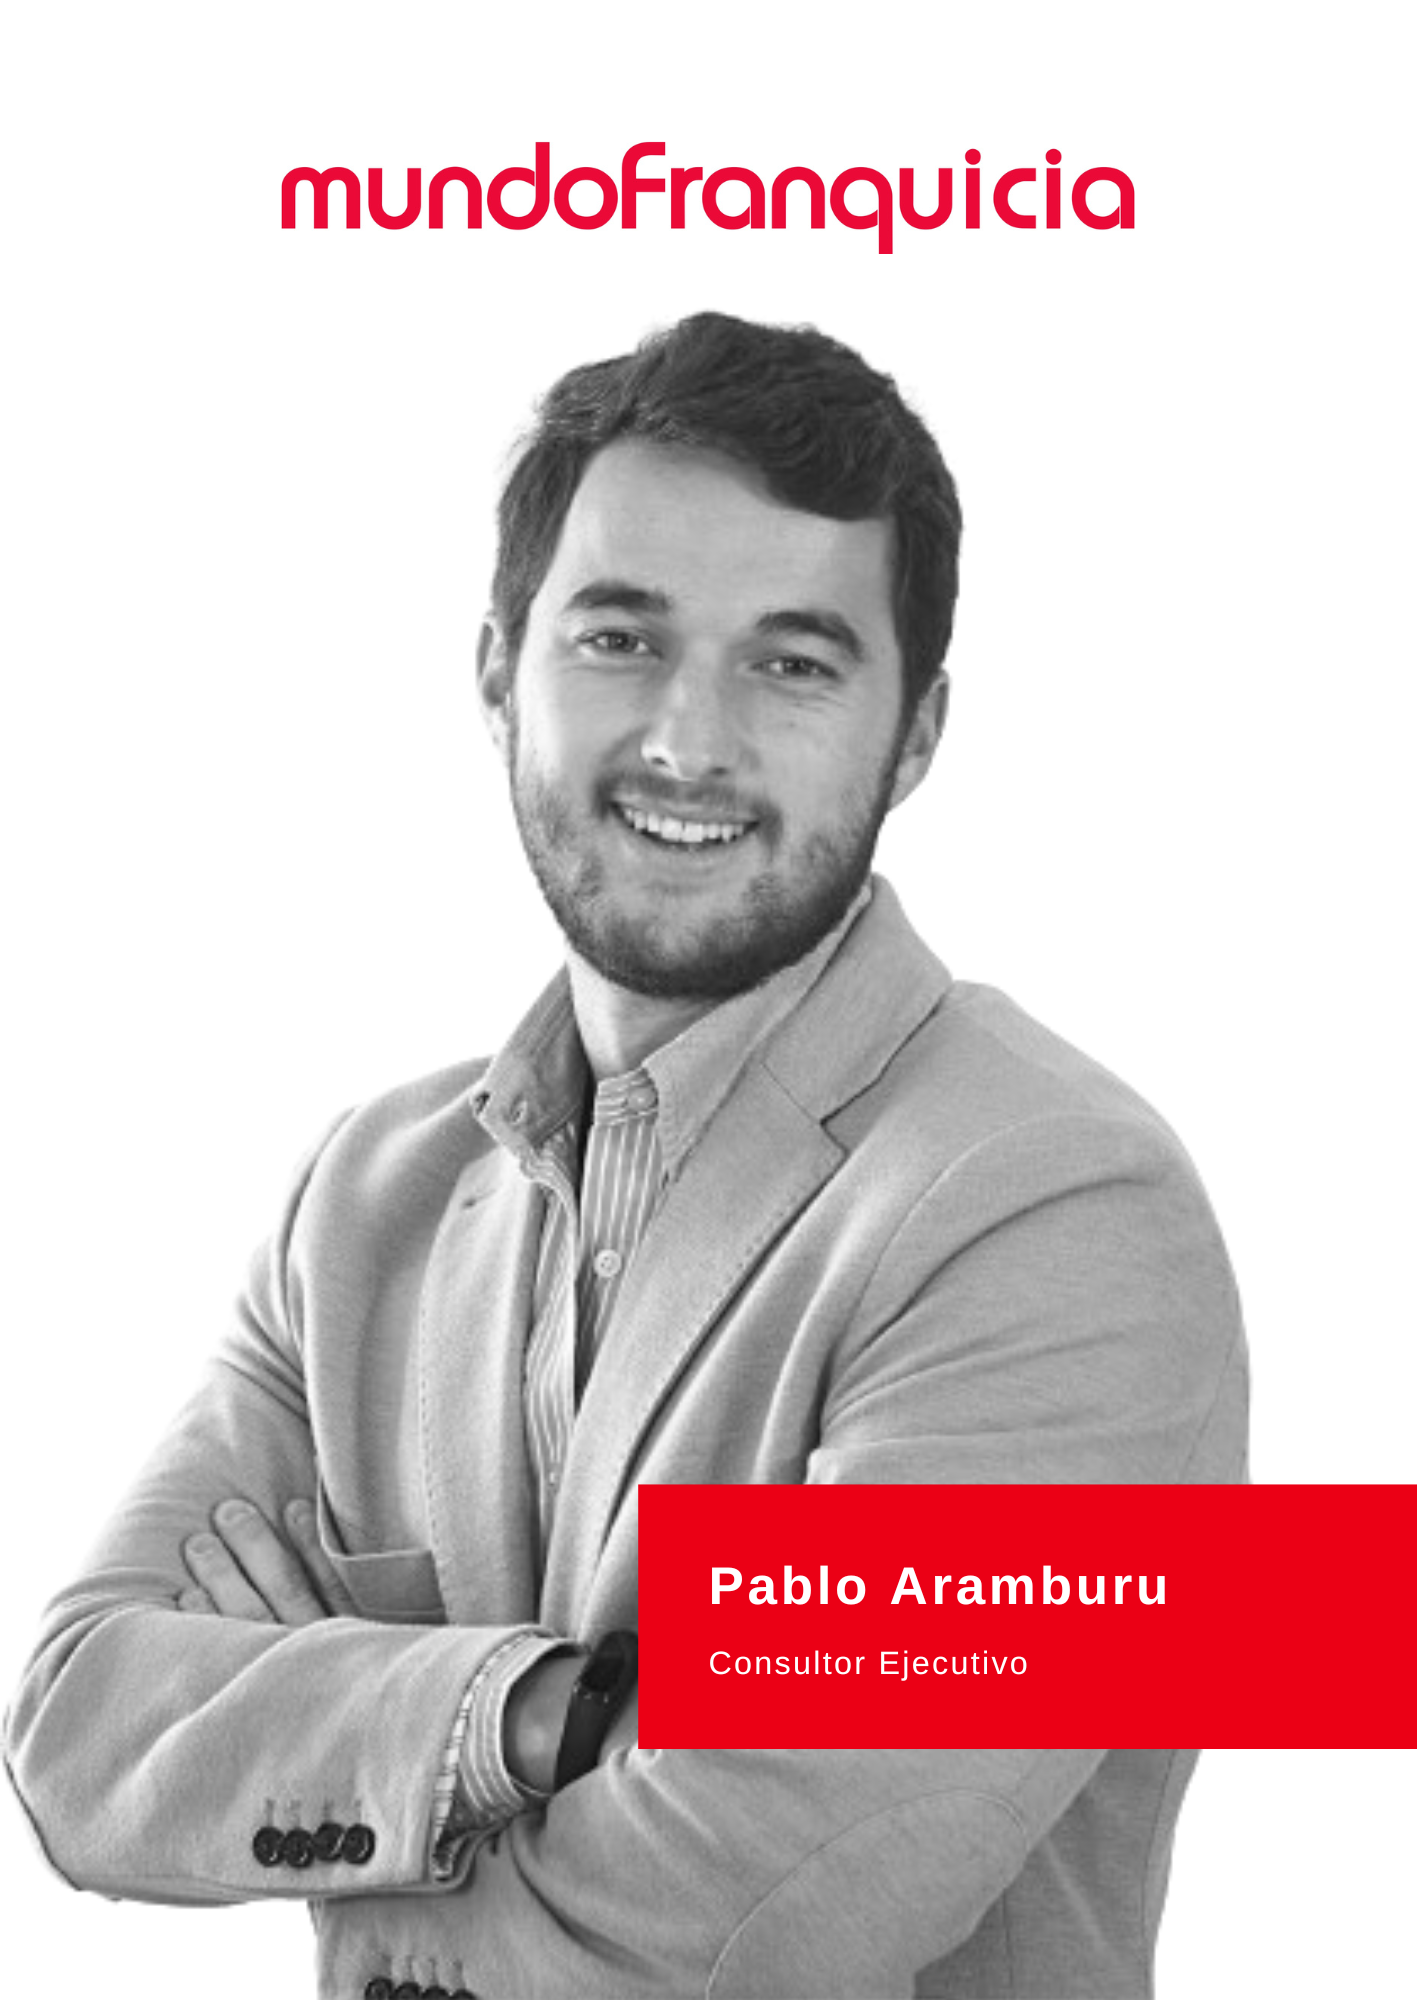 Pablo Aramburu